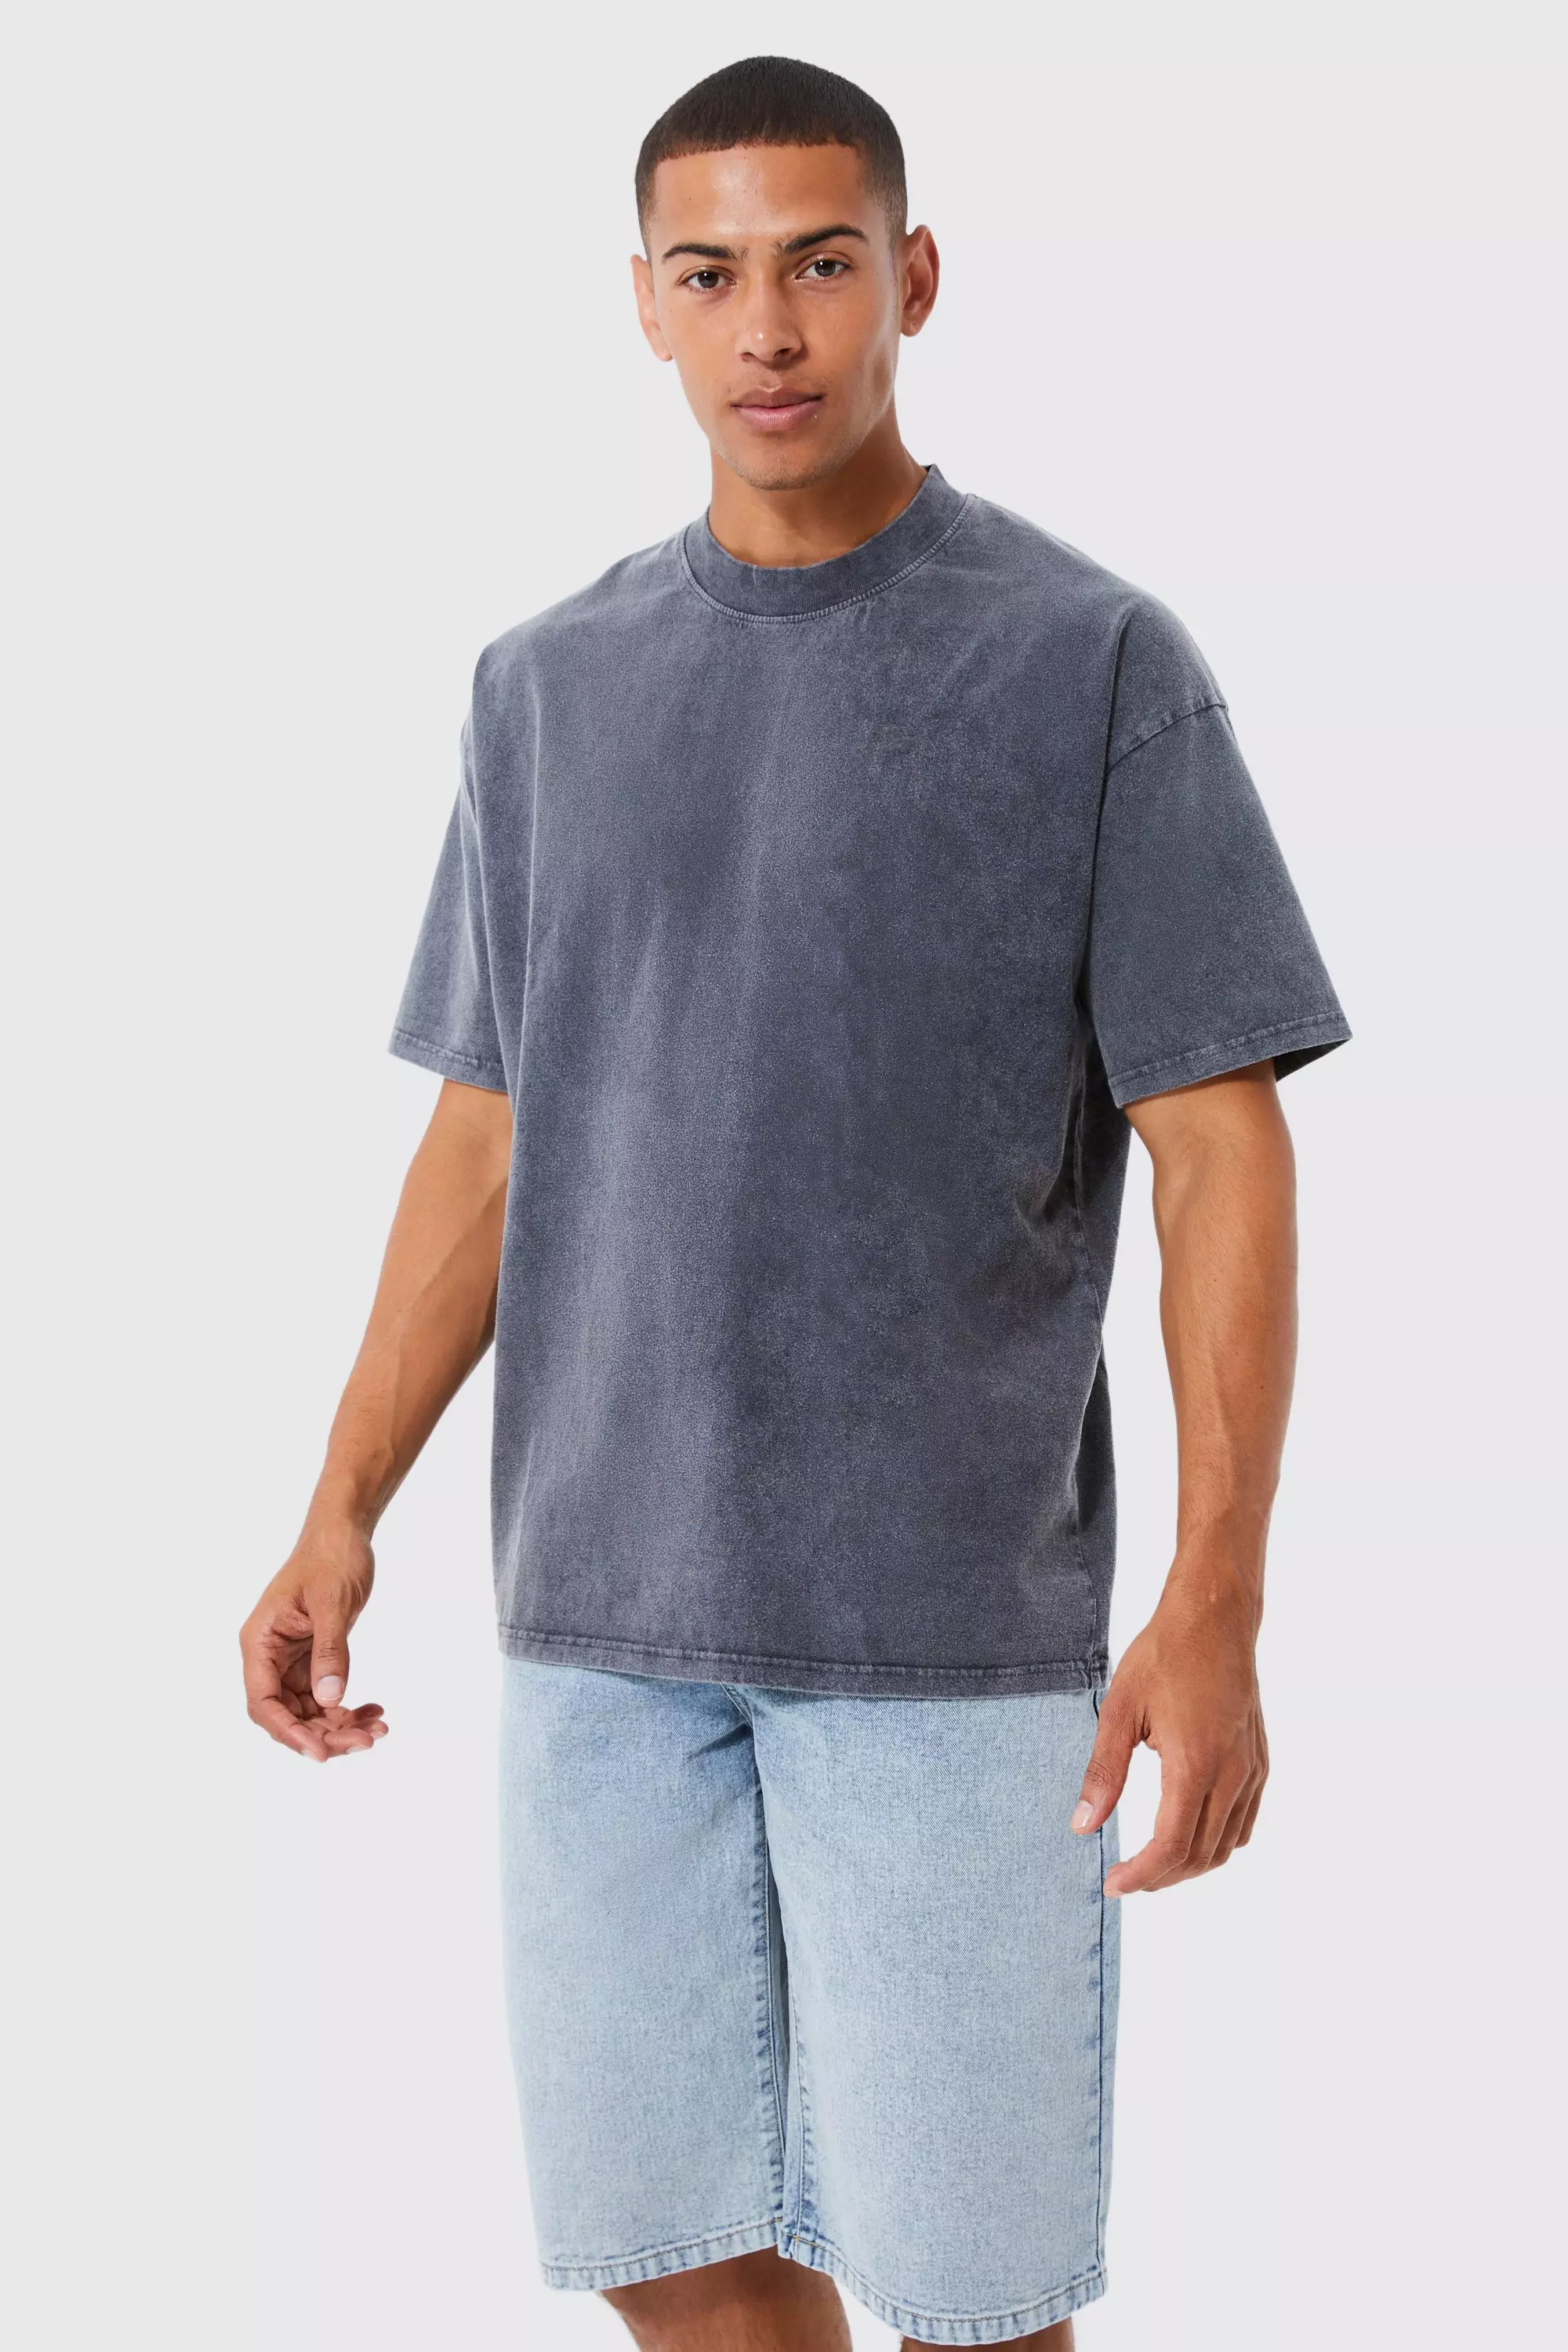 Oversized Heavyweight Washed T-shirt Charcoal